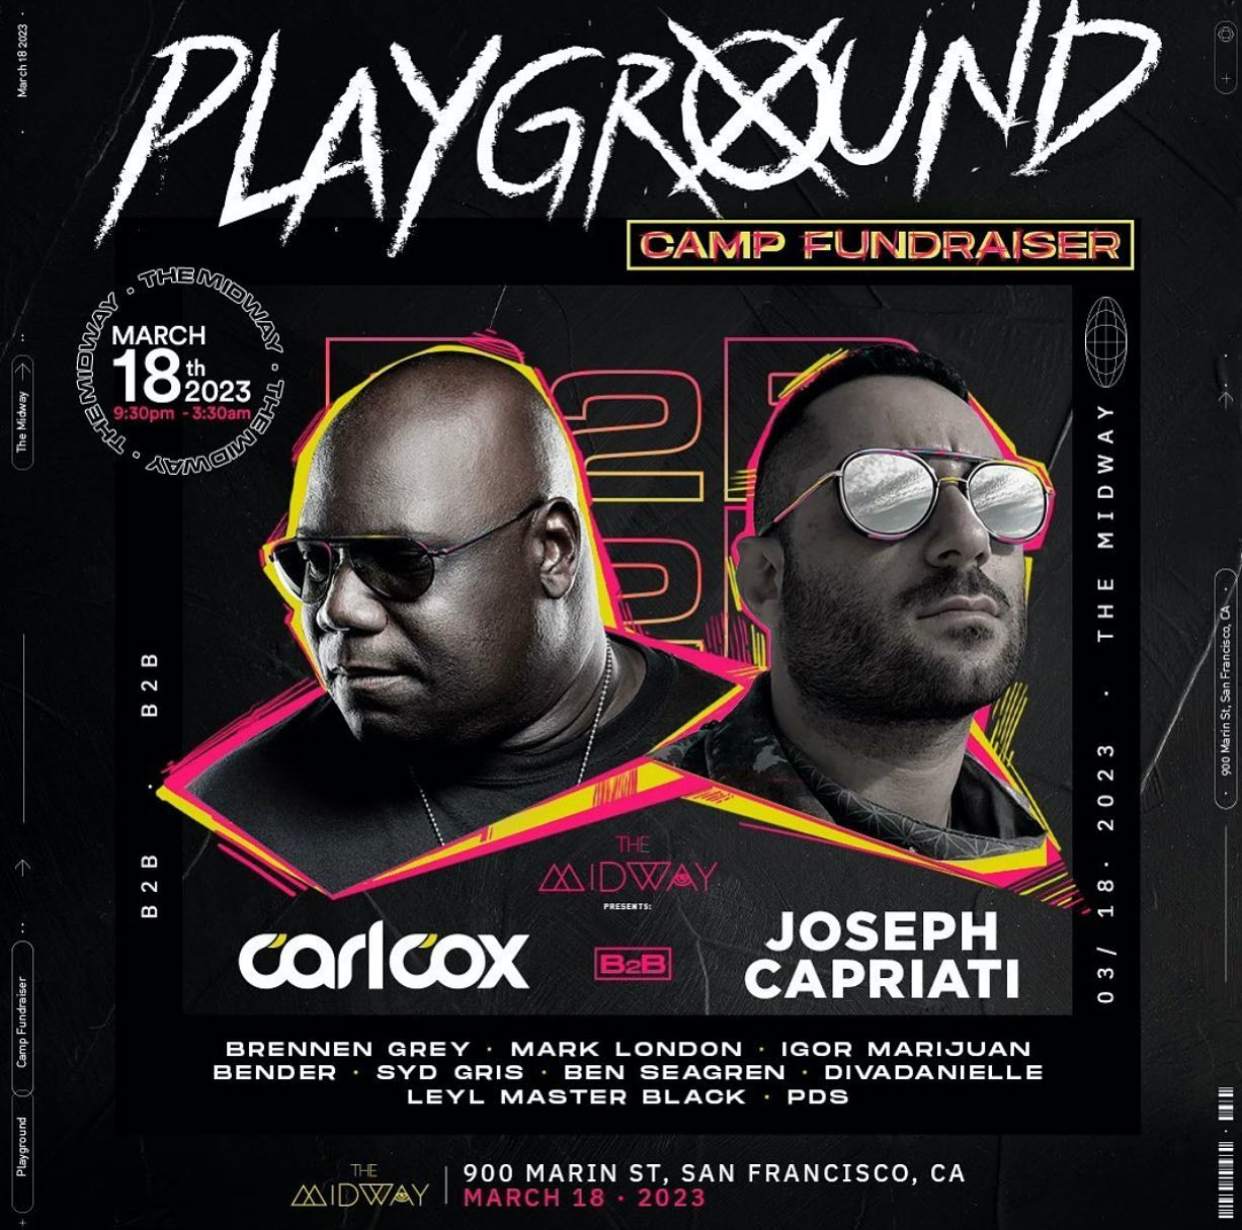 Carl Cox & Joseph Capriati • DJ Mark London • Playground Camp • Burning Man Fundraiser - フライヤー表